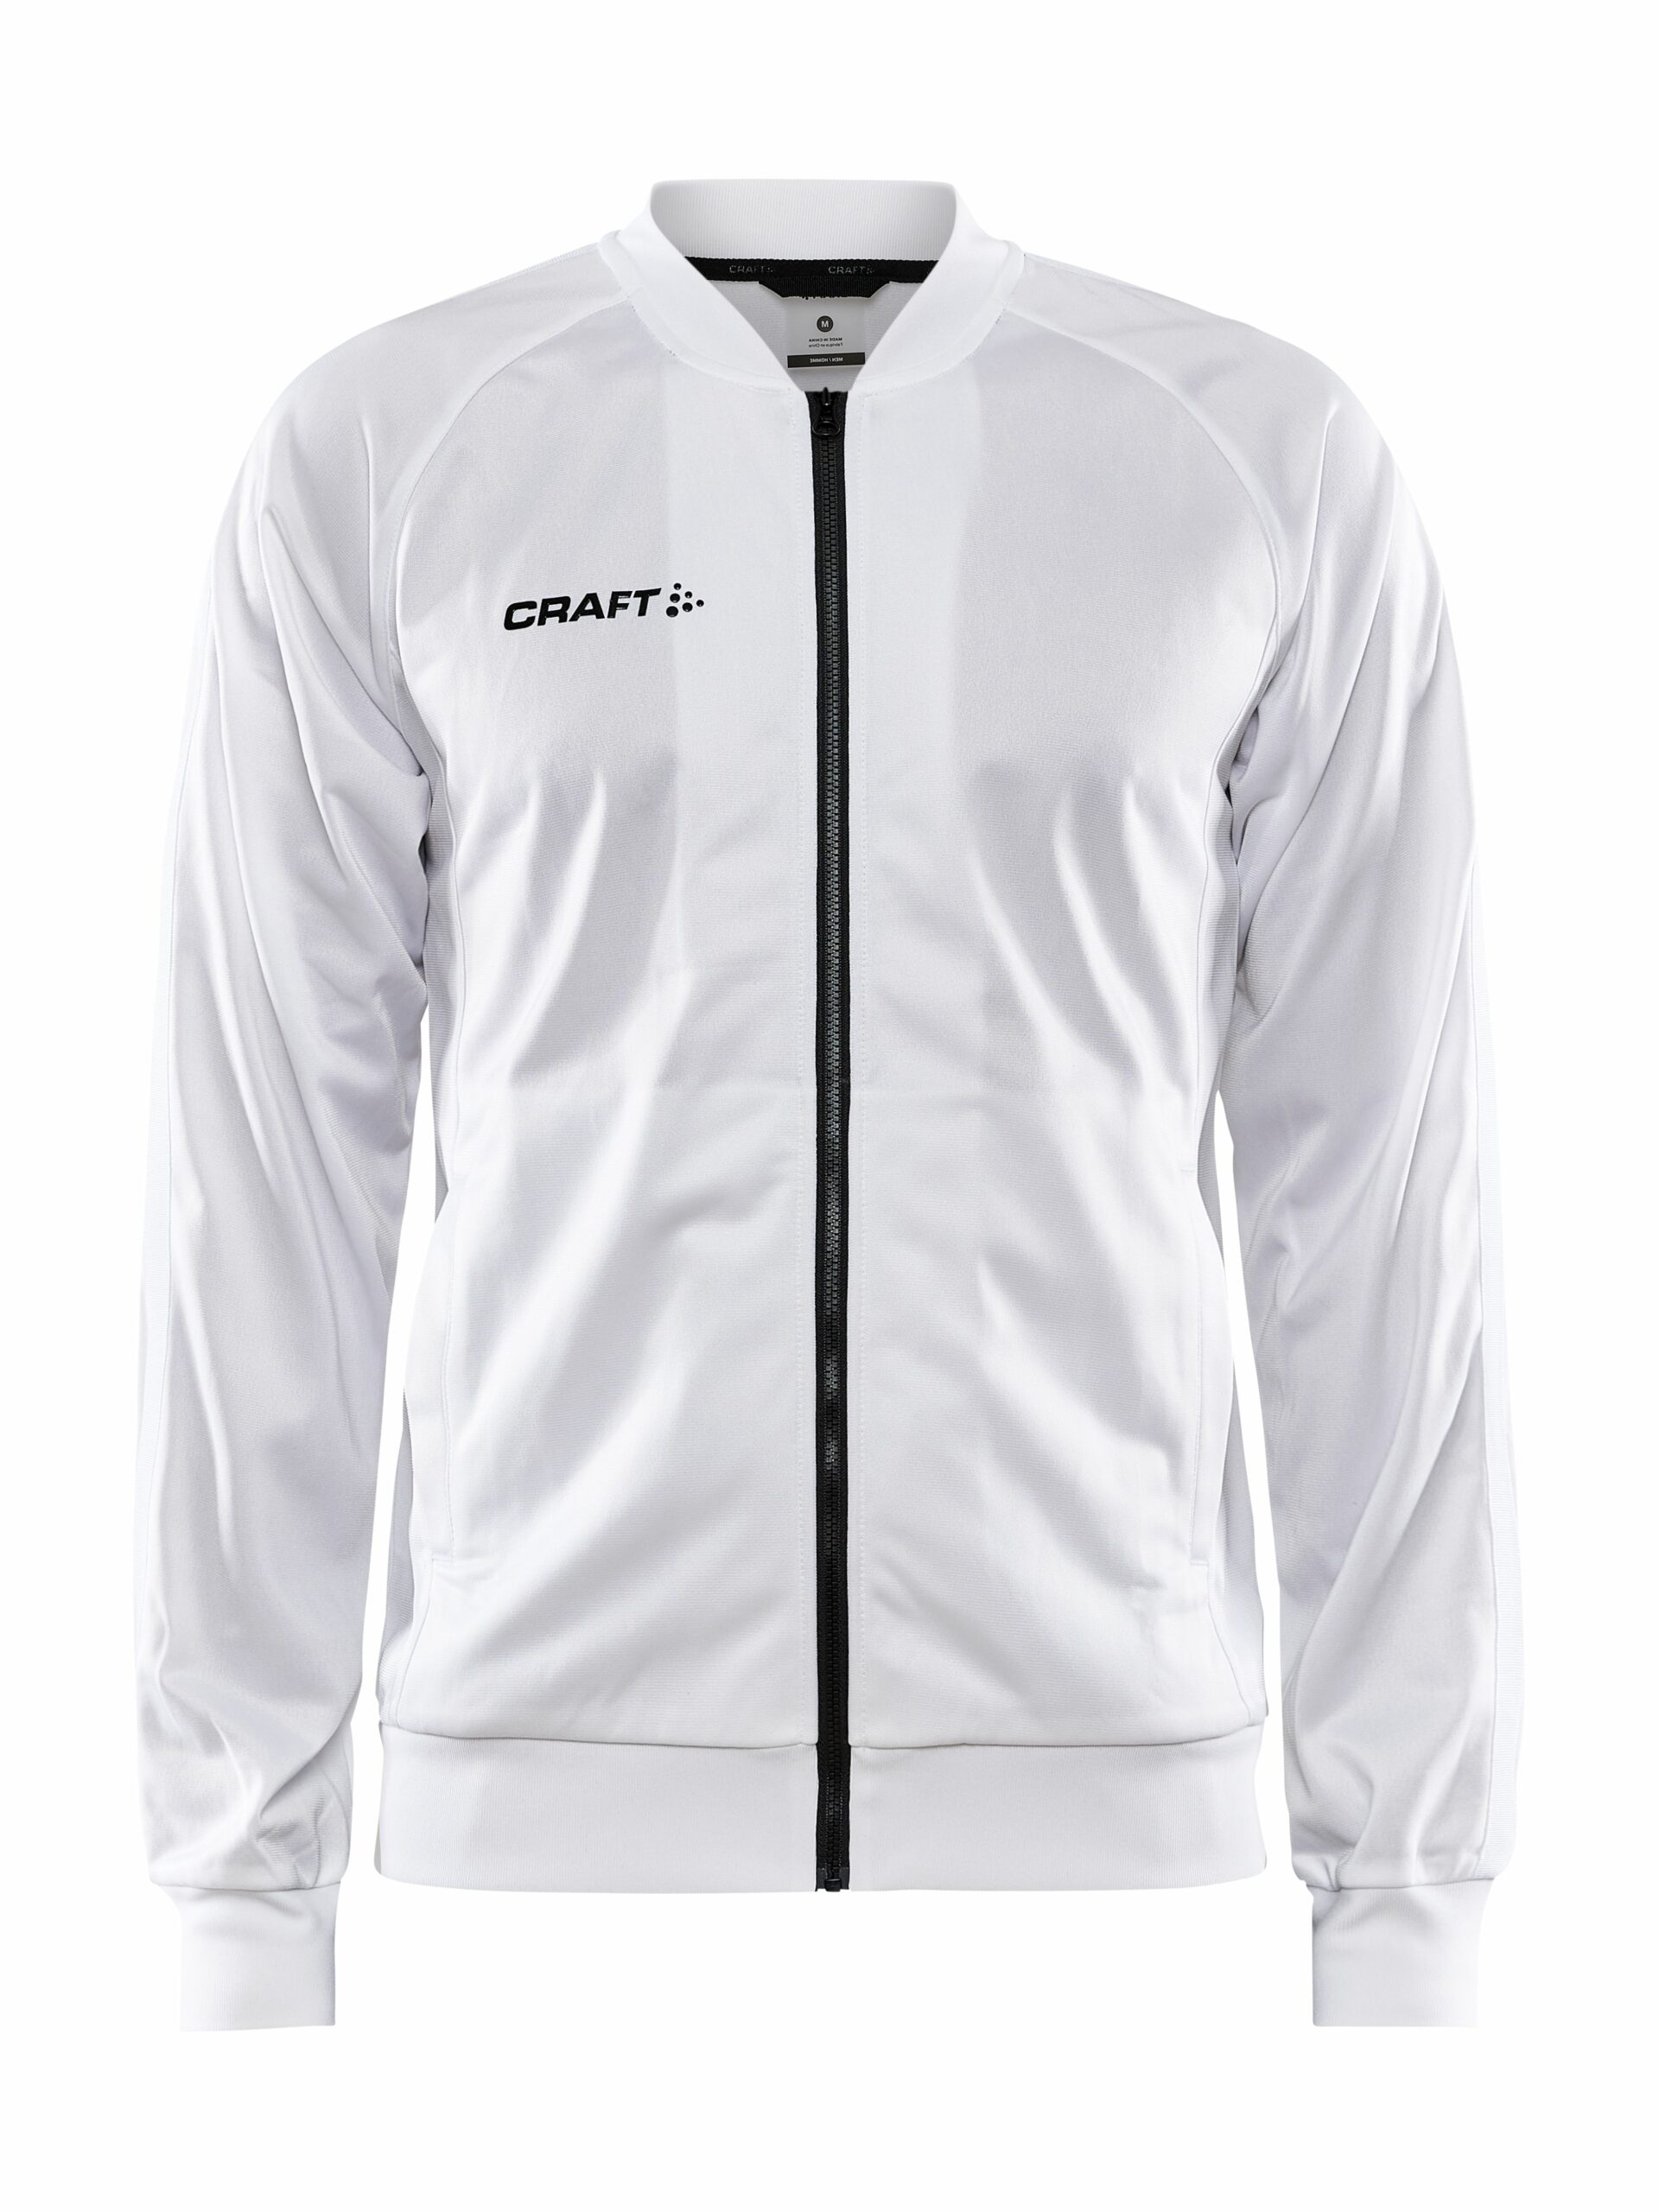 Craft - Team WCT Jacket Maend - White S